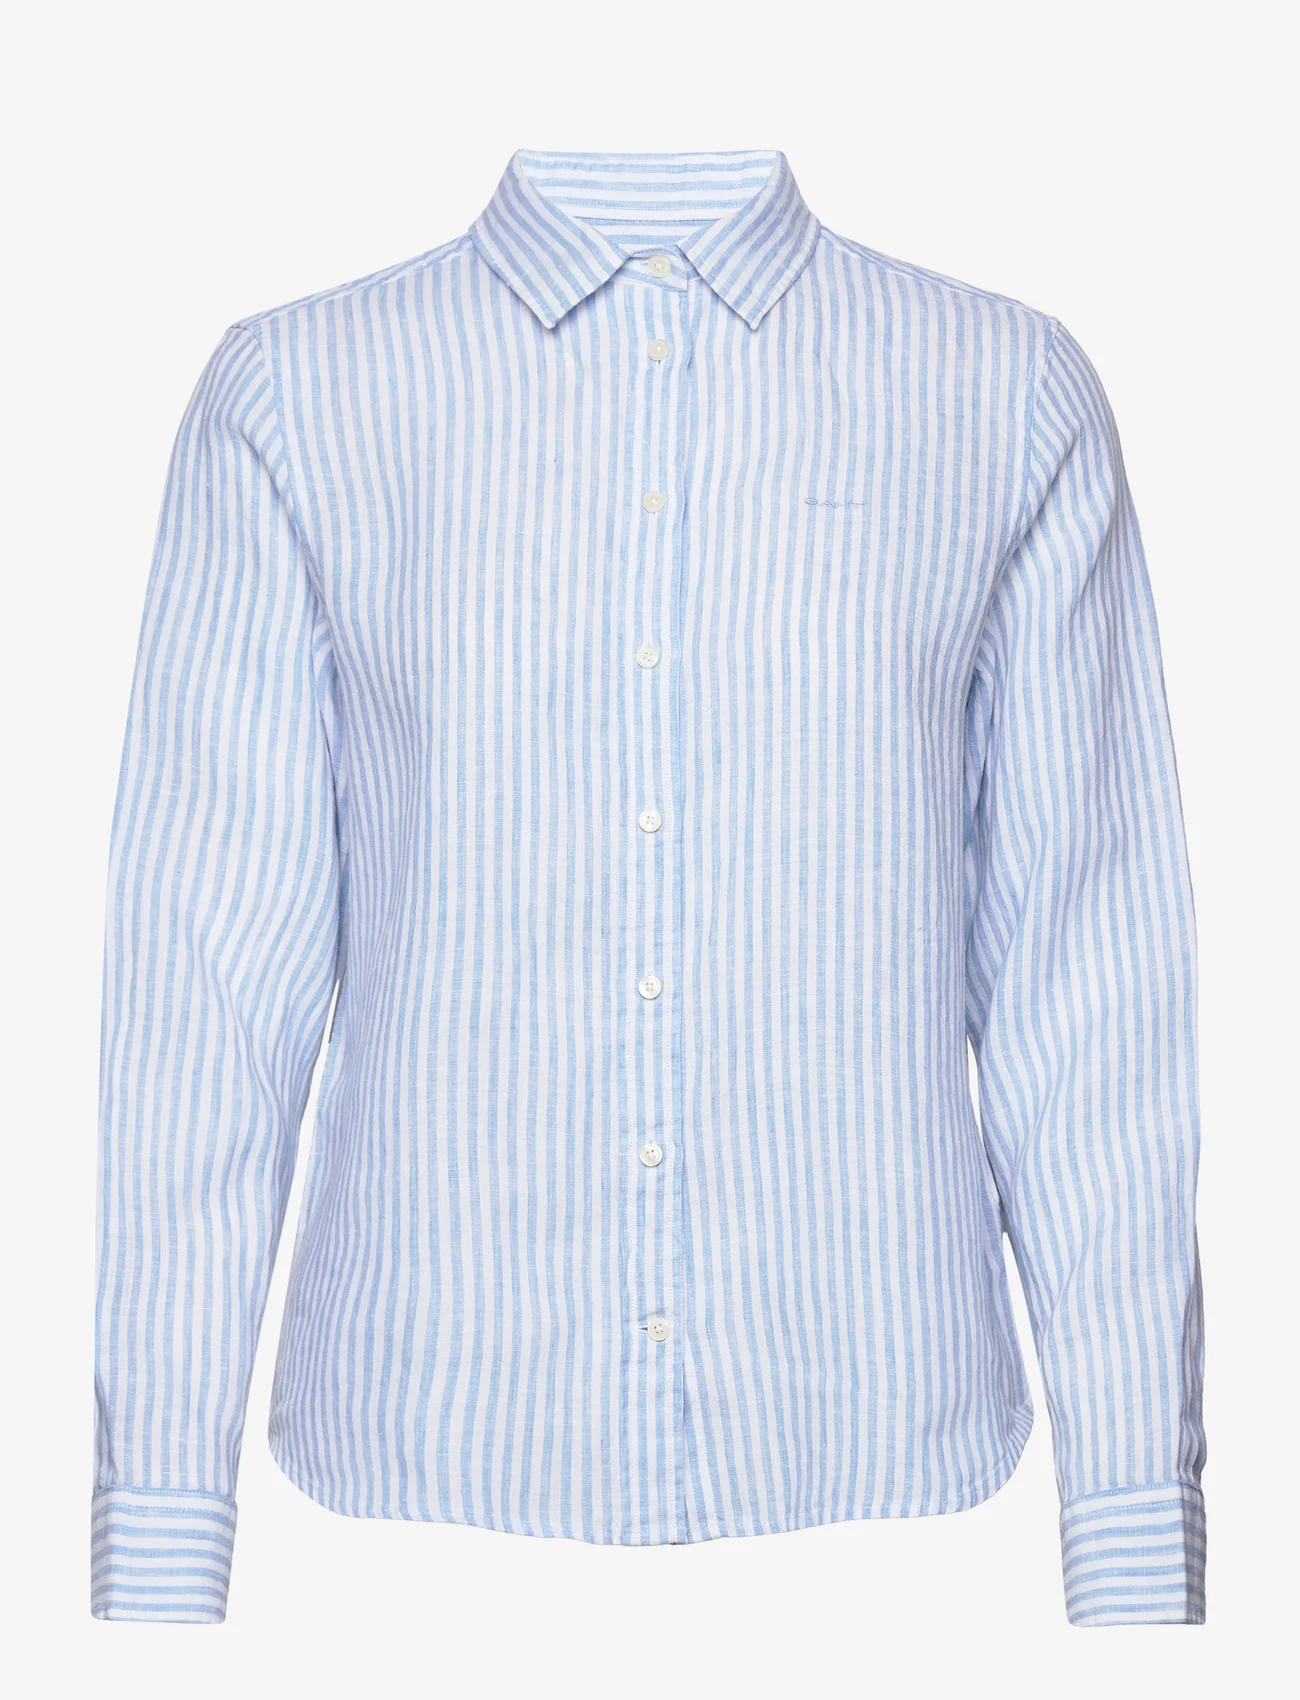 GANT - REG LINEN STRIPE SHIRT - långärmade skjortor - gentle blue - 0